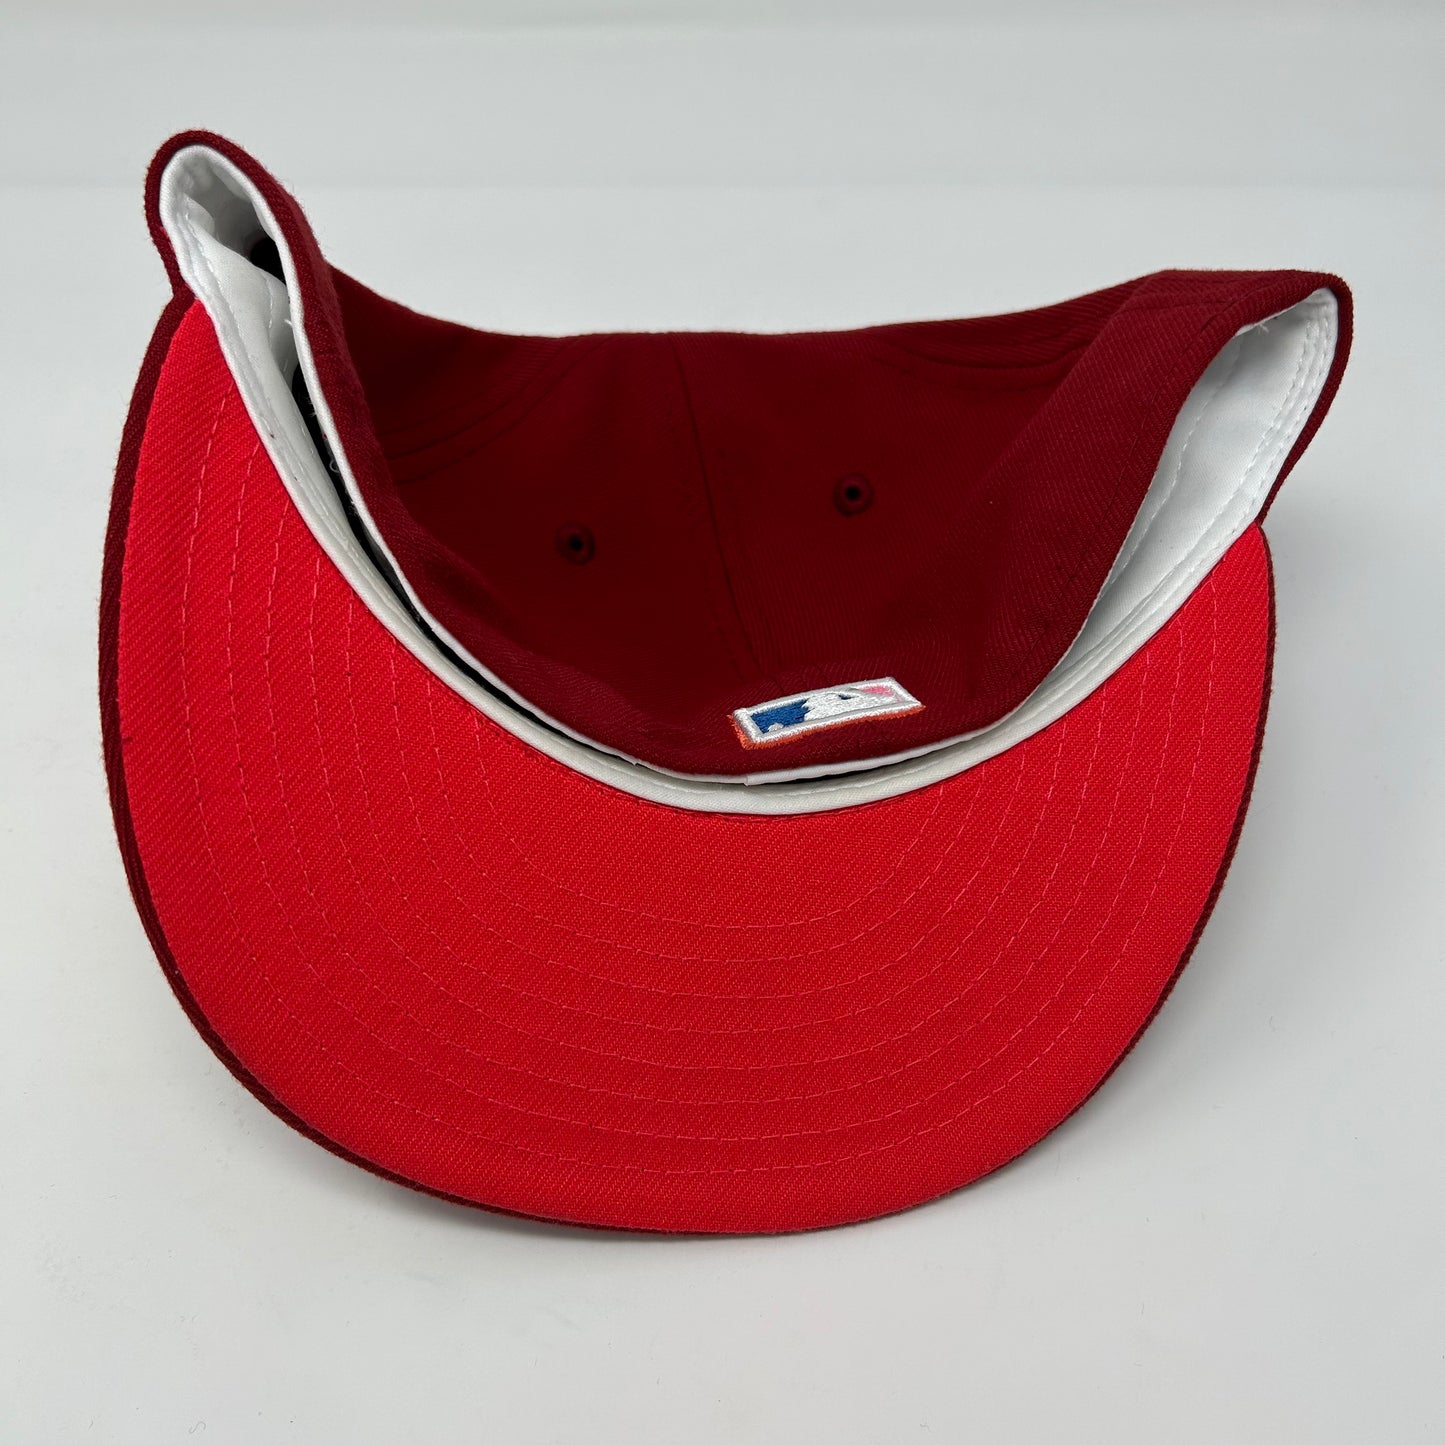 Houston Astros “Red Star” Hat